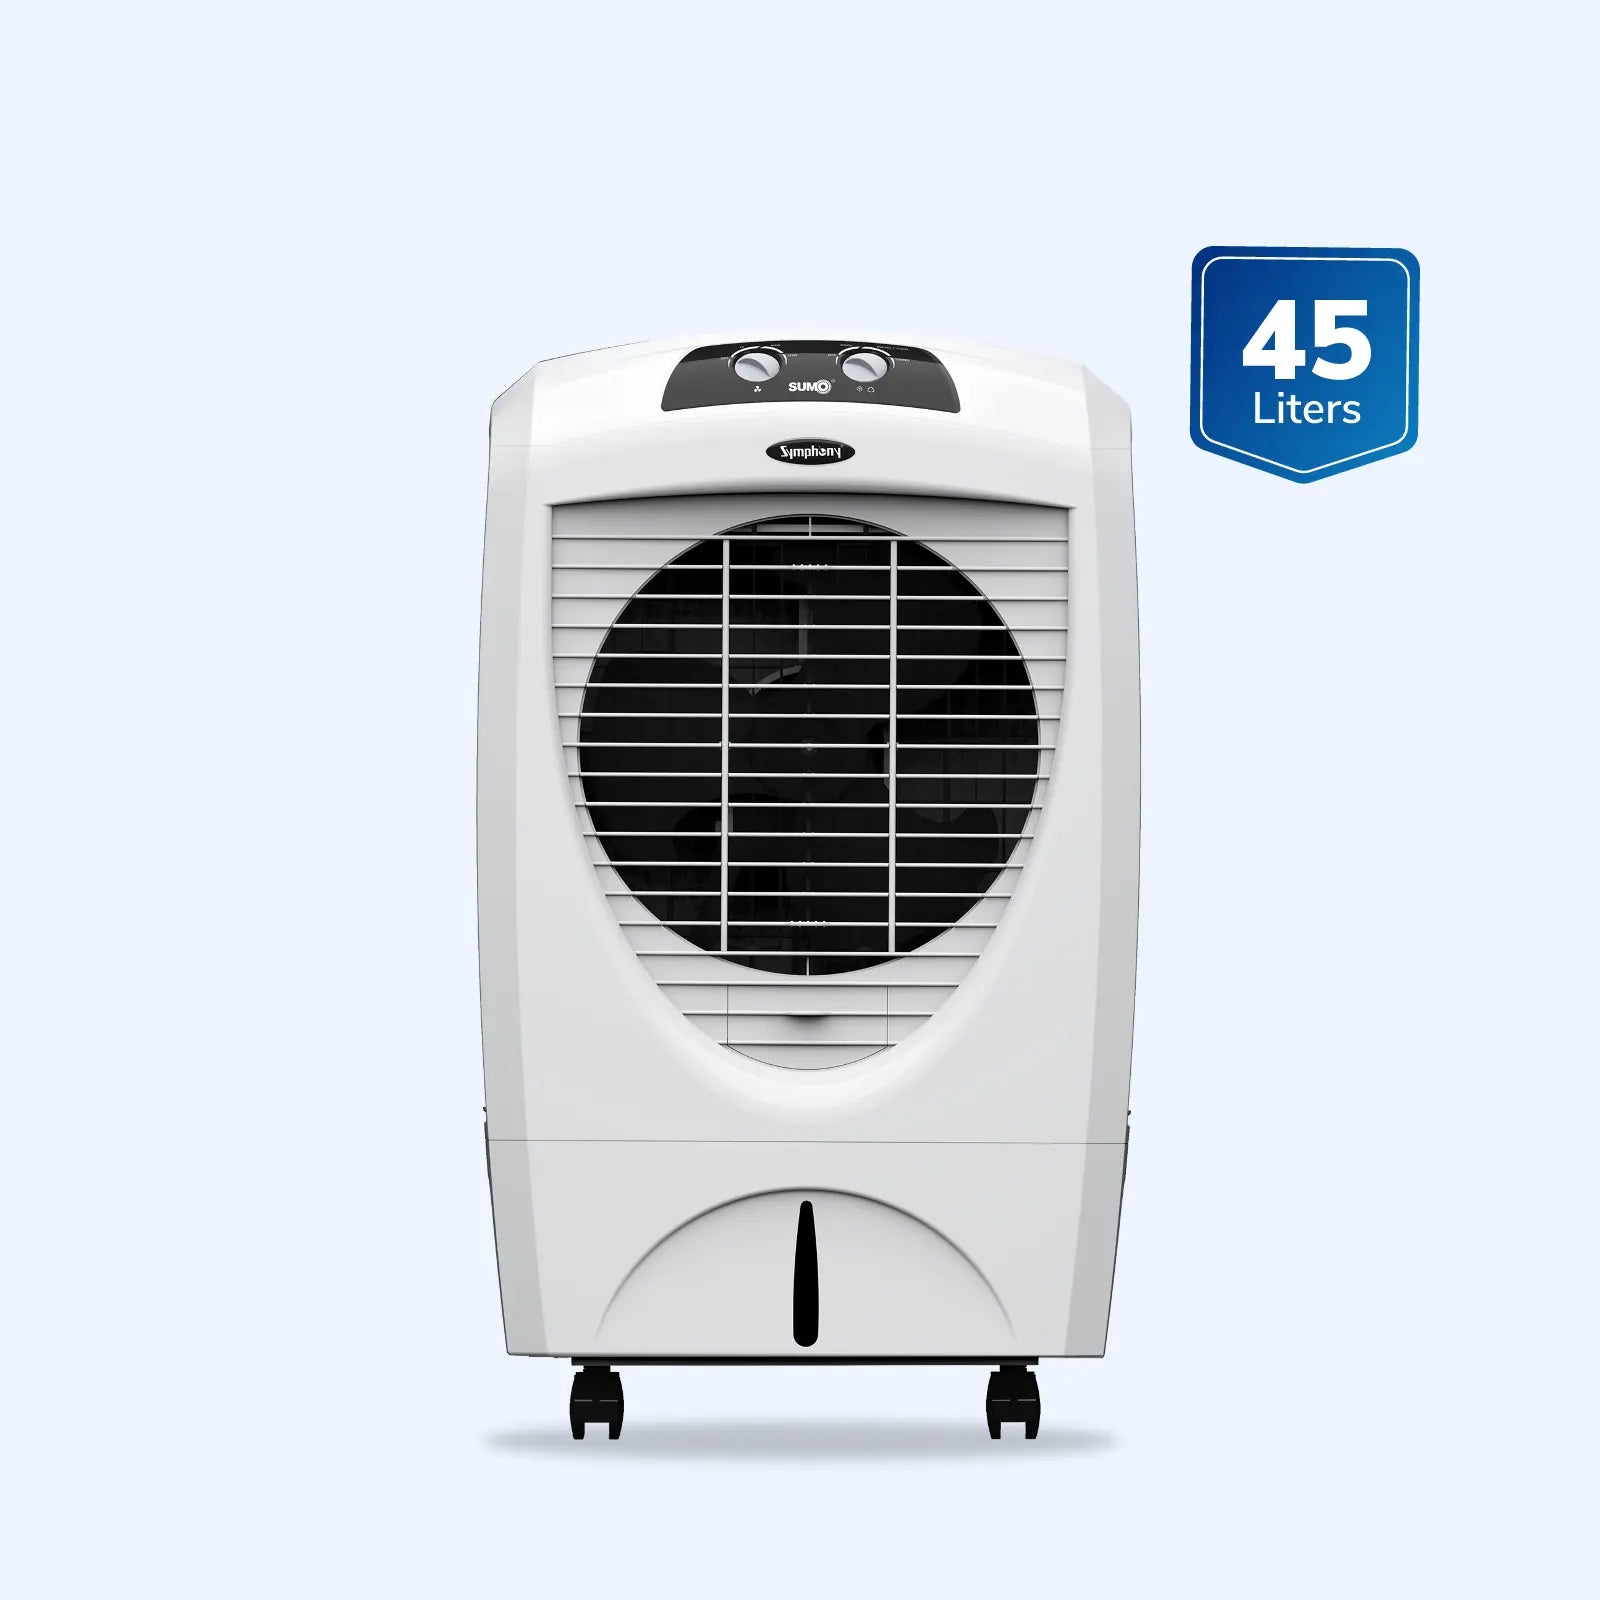 Sumo 45 Desert Air Cooler, 45 Litres